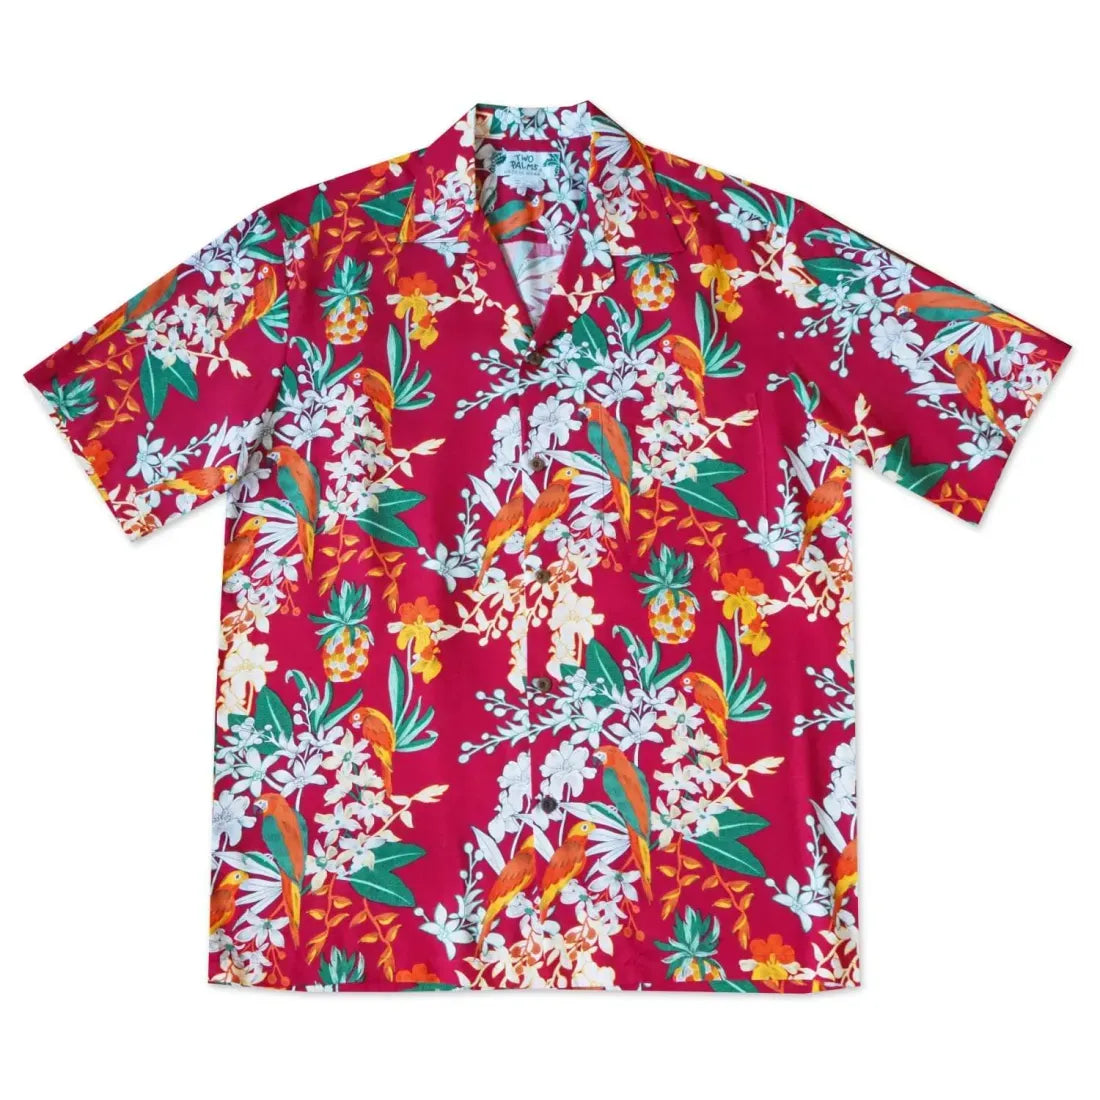 Wild parrots red hawaiian rayon shirt